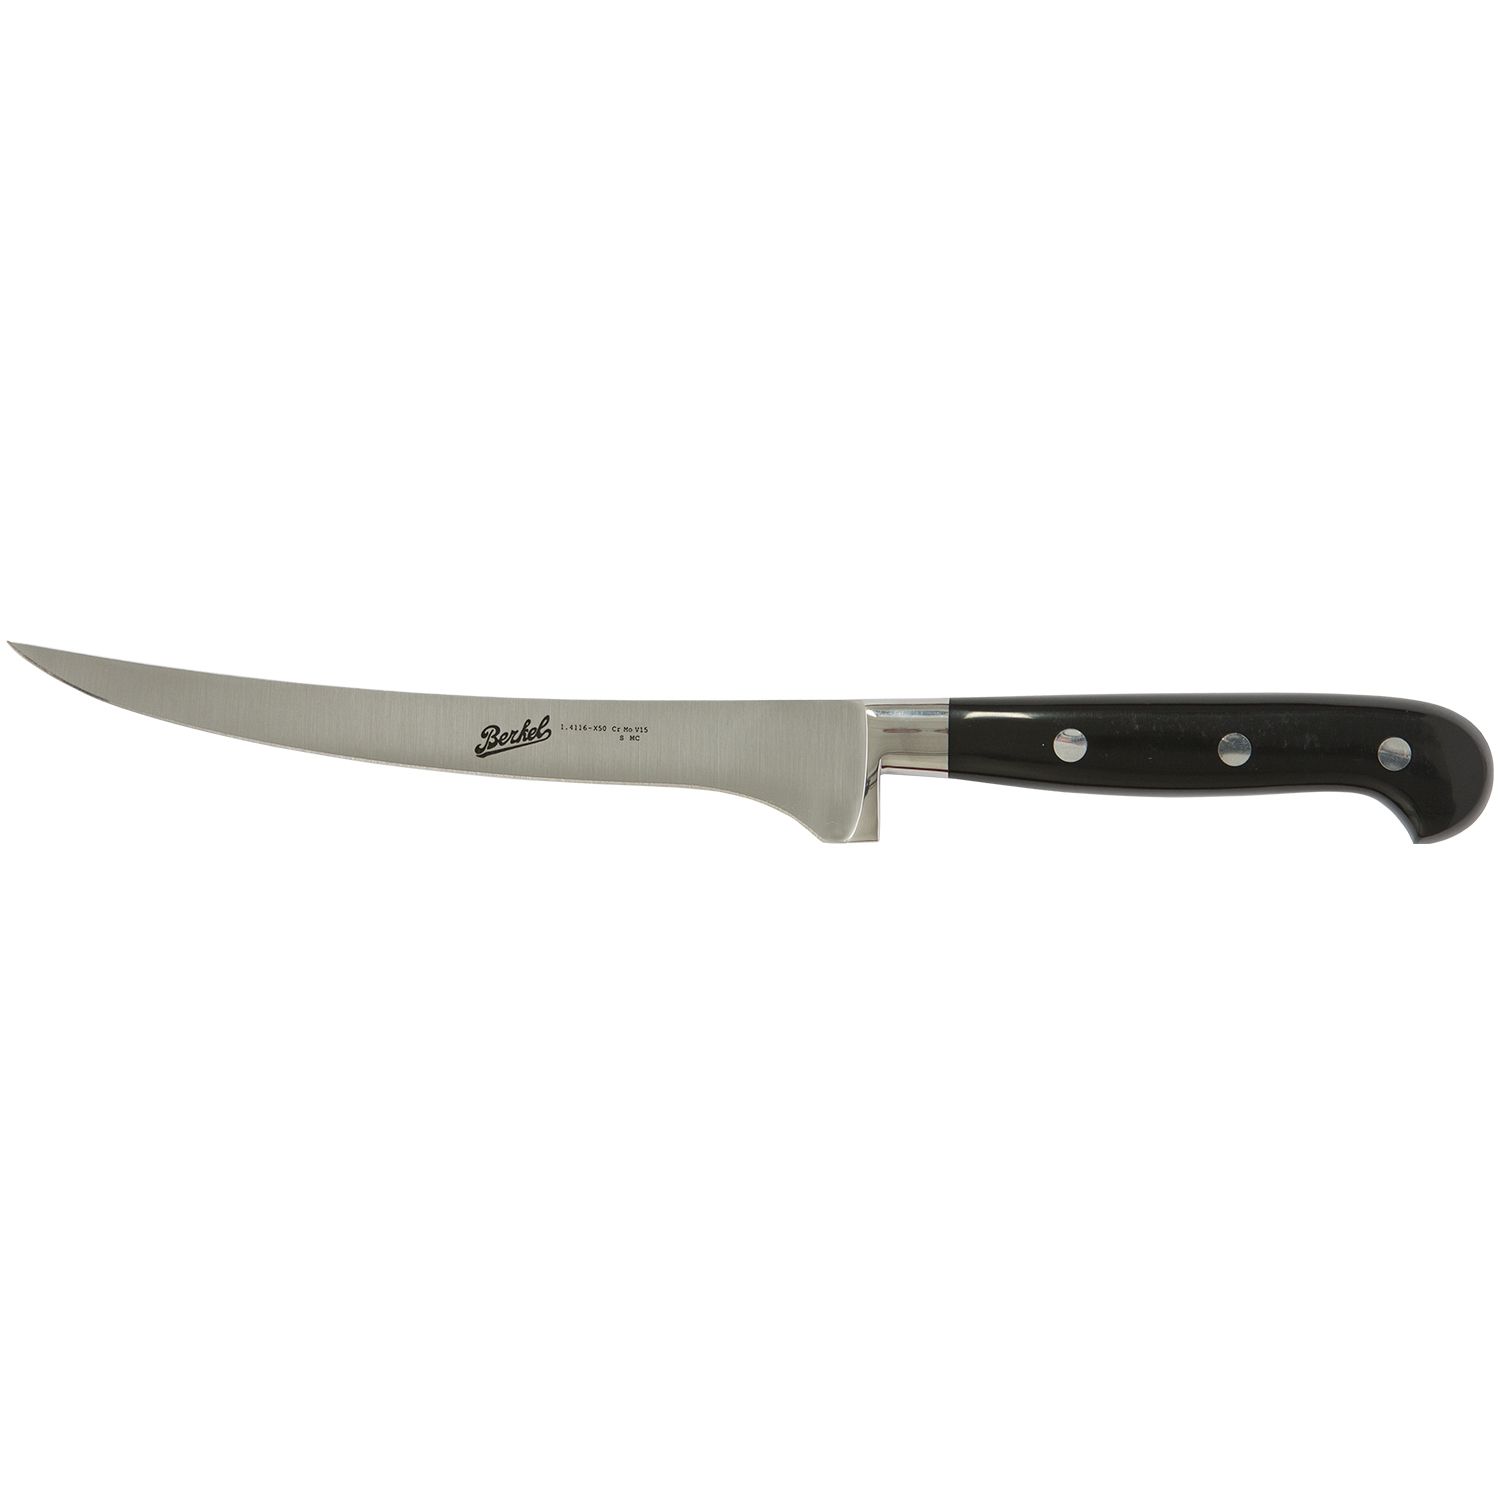 Fillet knife cm.18 Stainless Steel Berkel Adhoc Handle Glossy Black Resin, Knives